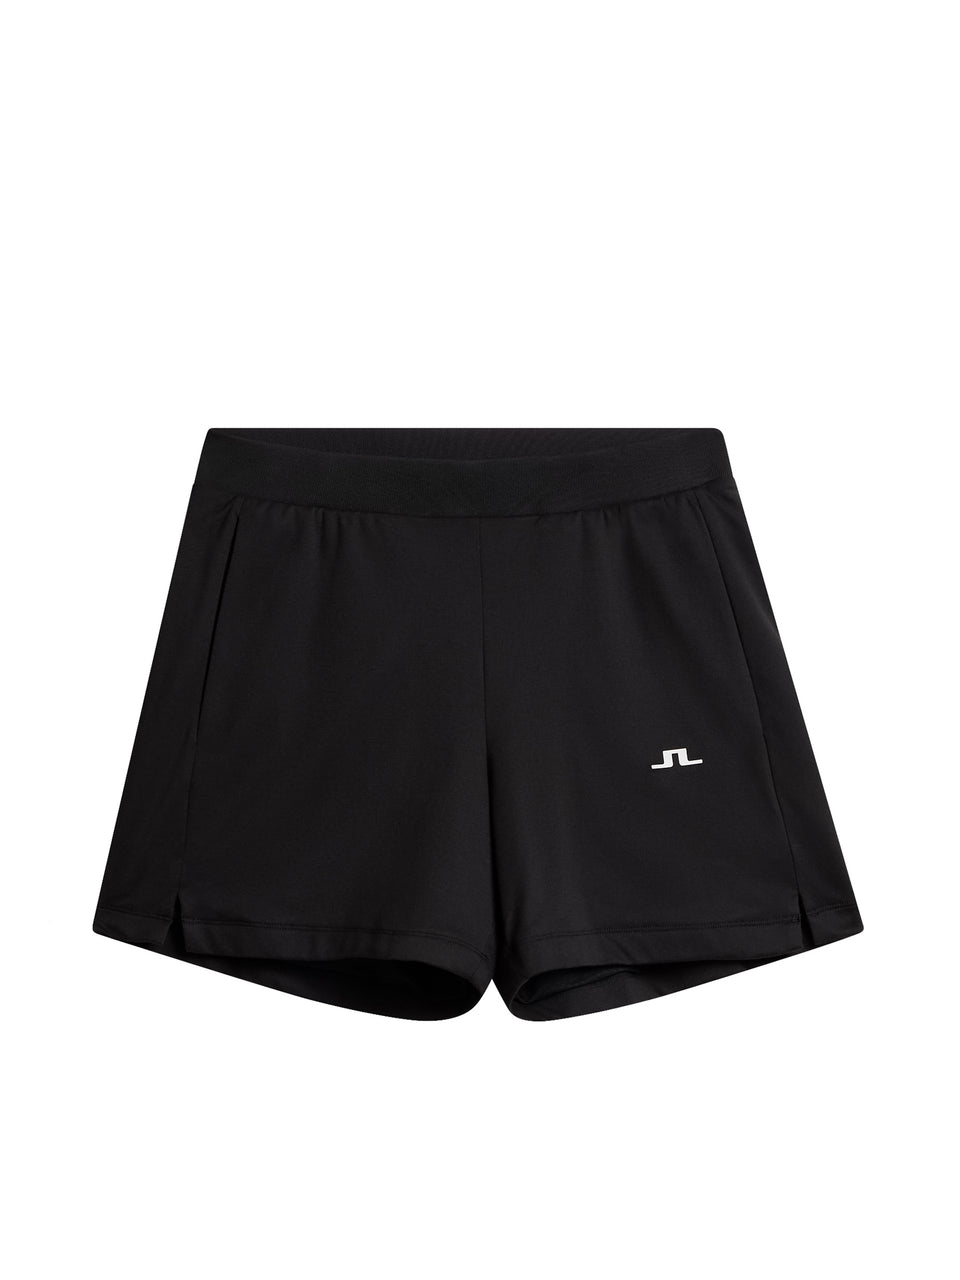 Vice Shorts / Black